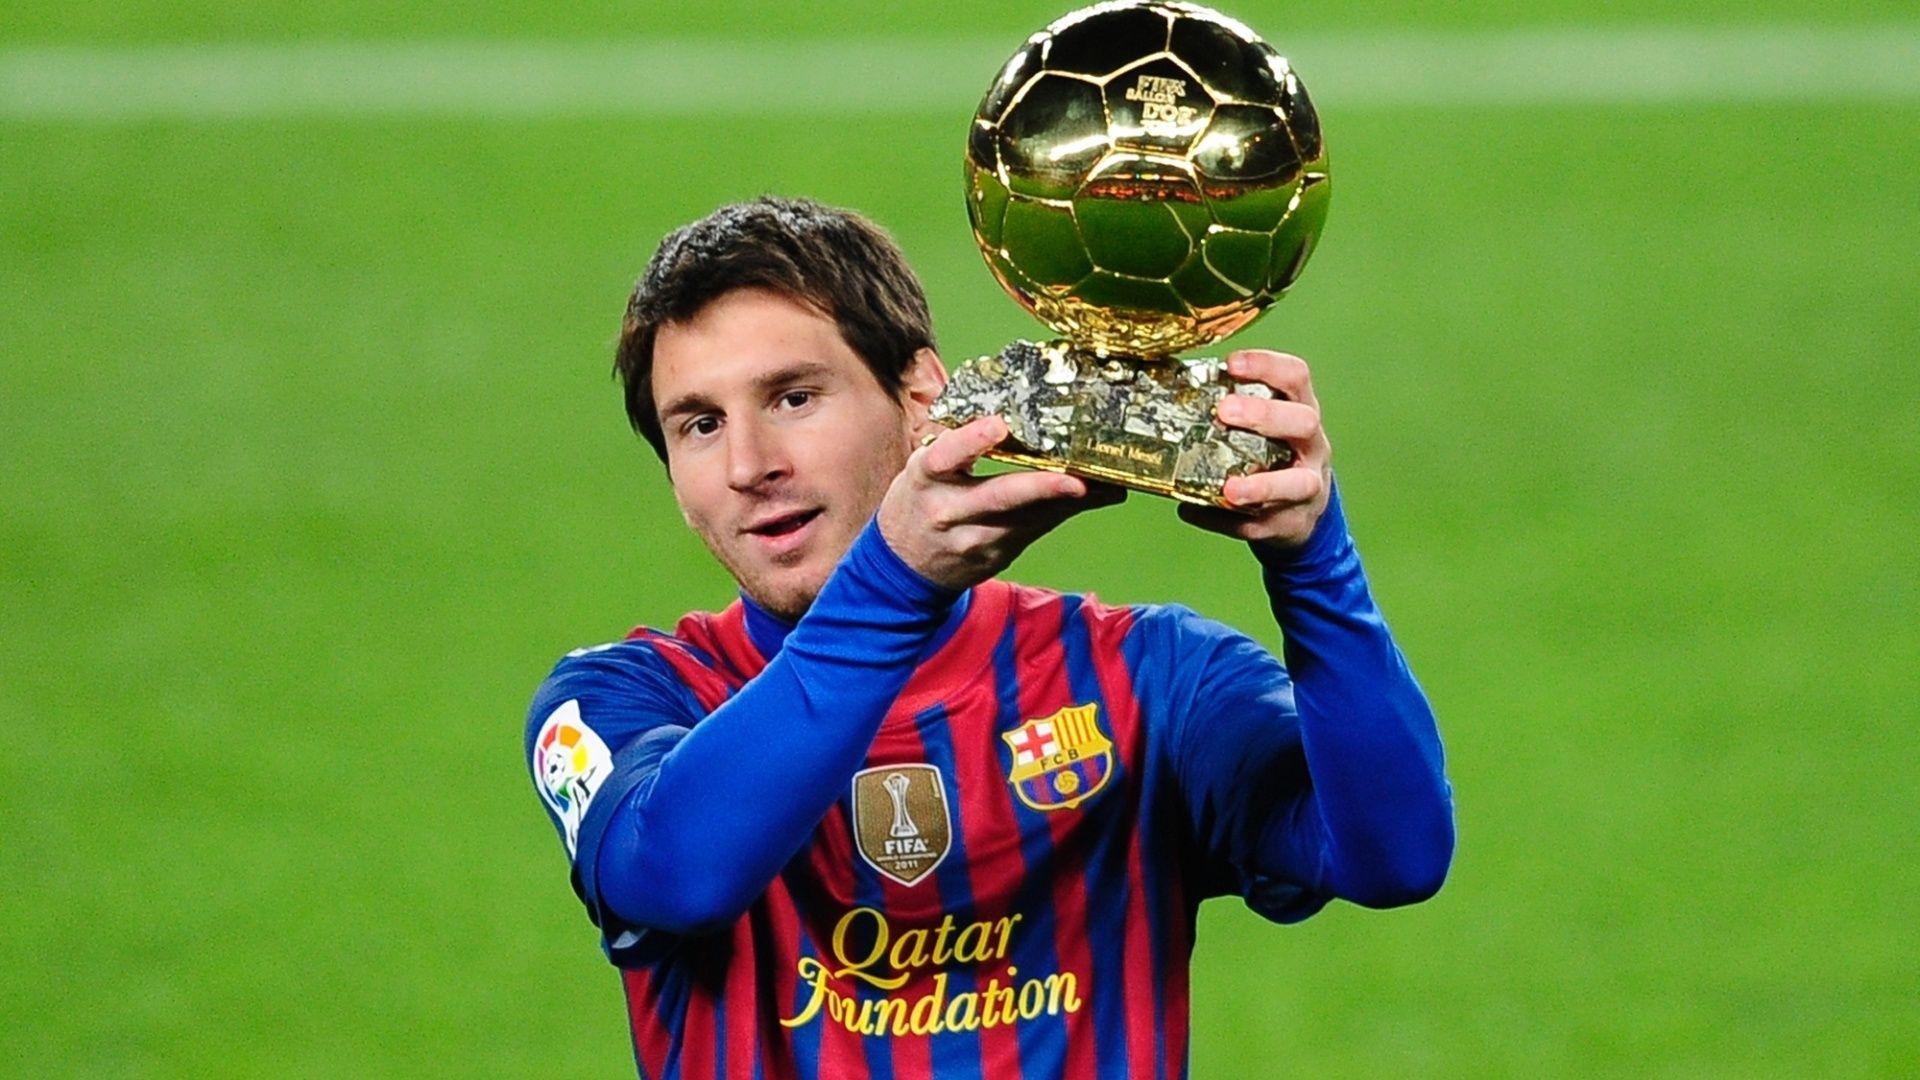 Lionel Messi Wallpaper HD Download download latest Lionel